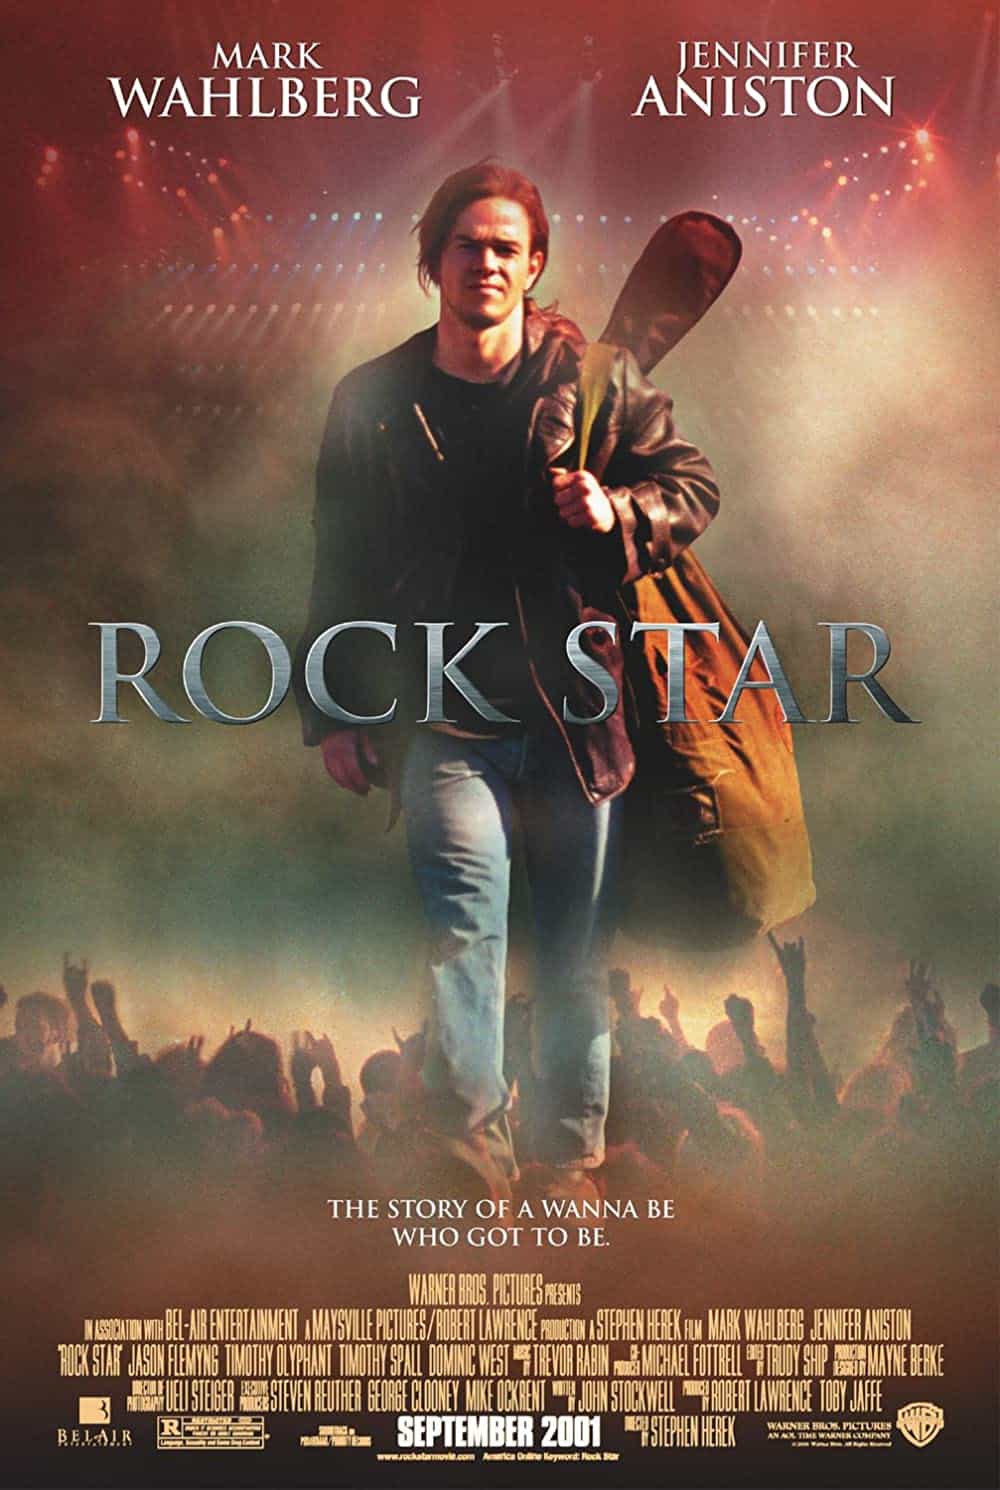 Rock Star (2001) Best Rock Movies to Watch